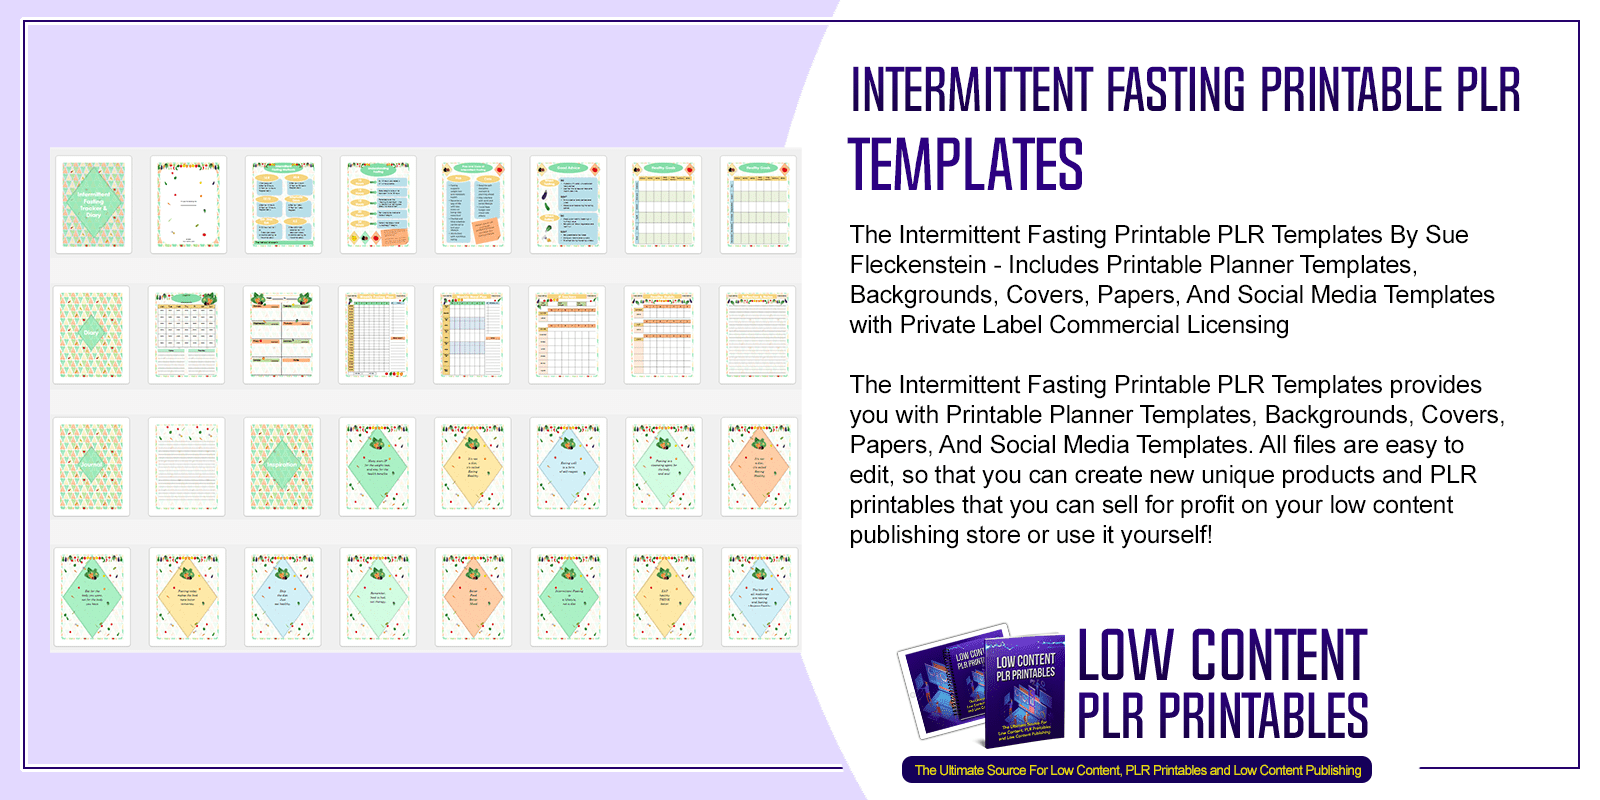 Intermittent Fasting Printable PLR Templates